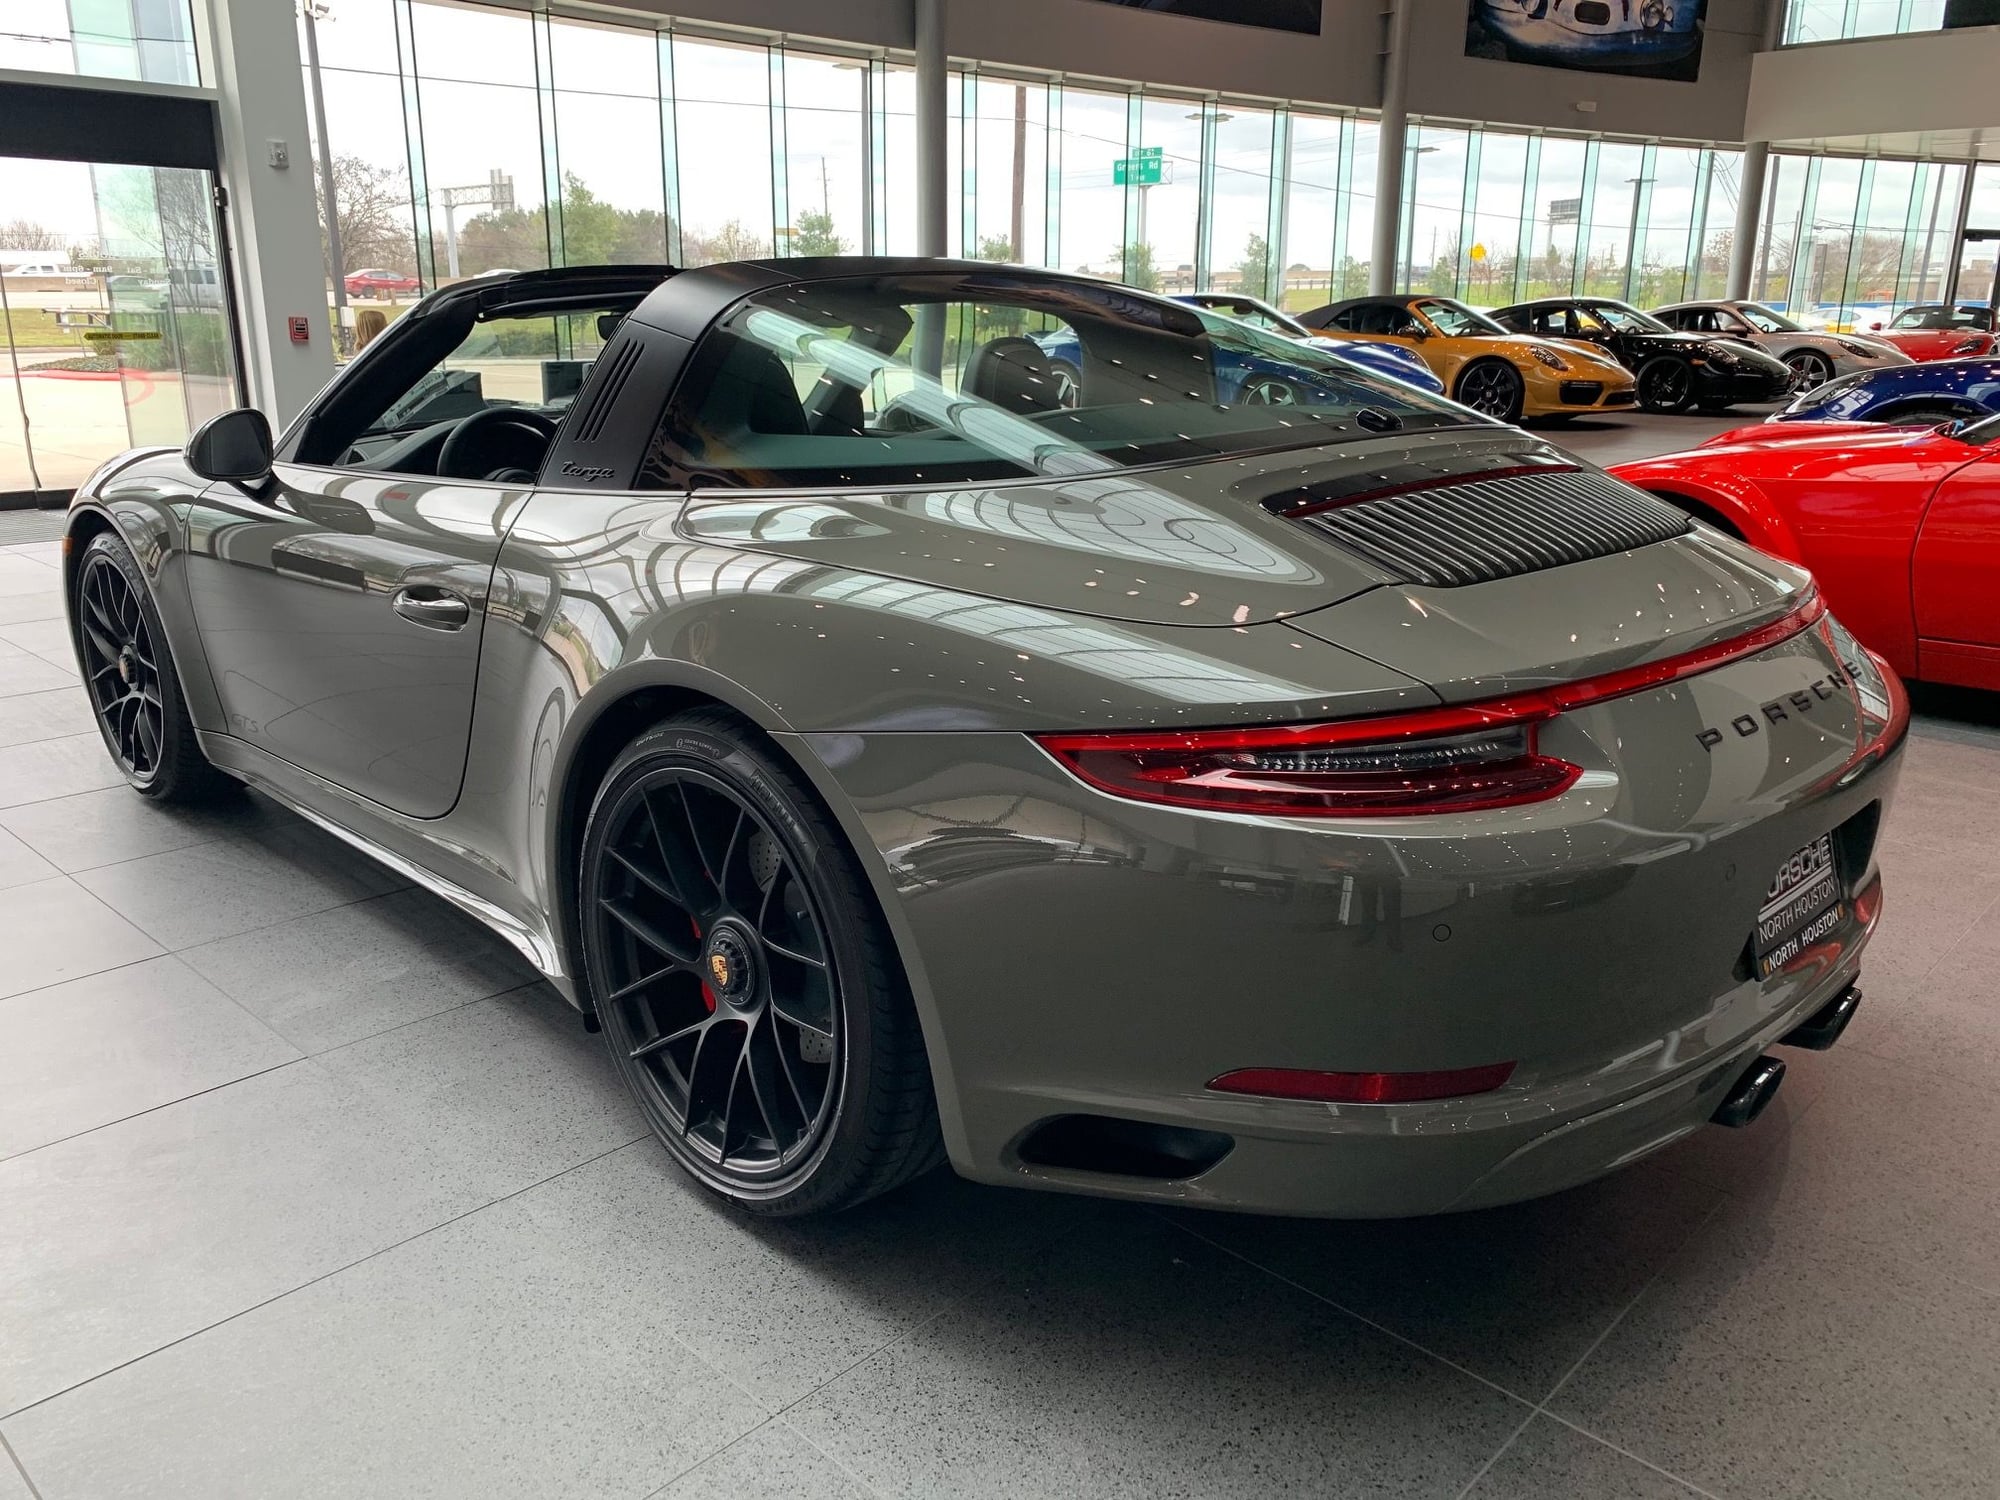 2019 Porsche 911 - New 2019 911 Targa 4 GTS PTS Alex Grey MT! - New - VIN WP0BB2A94KS126431 - 17 Miles - 6 cyl - AWD - Manual - Coupe - Gray - Houston, TX 77090, United States